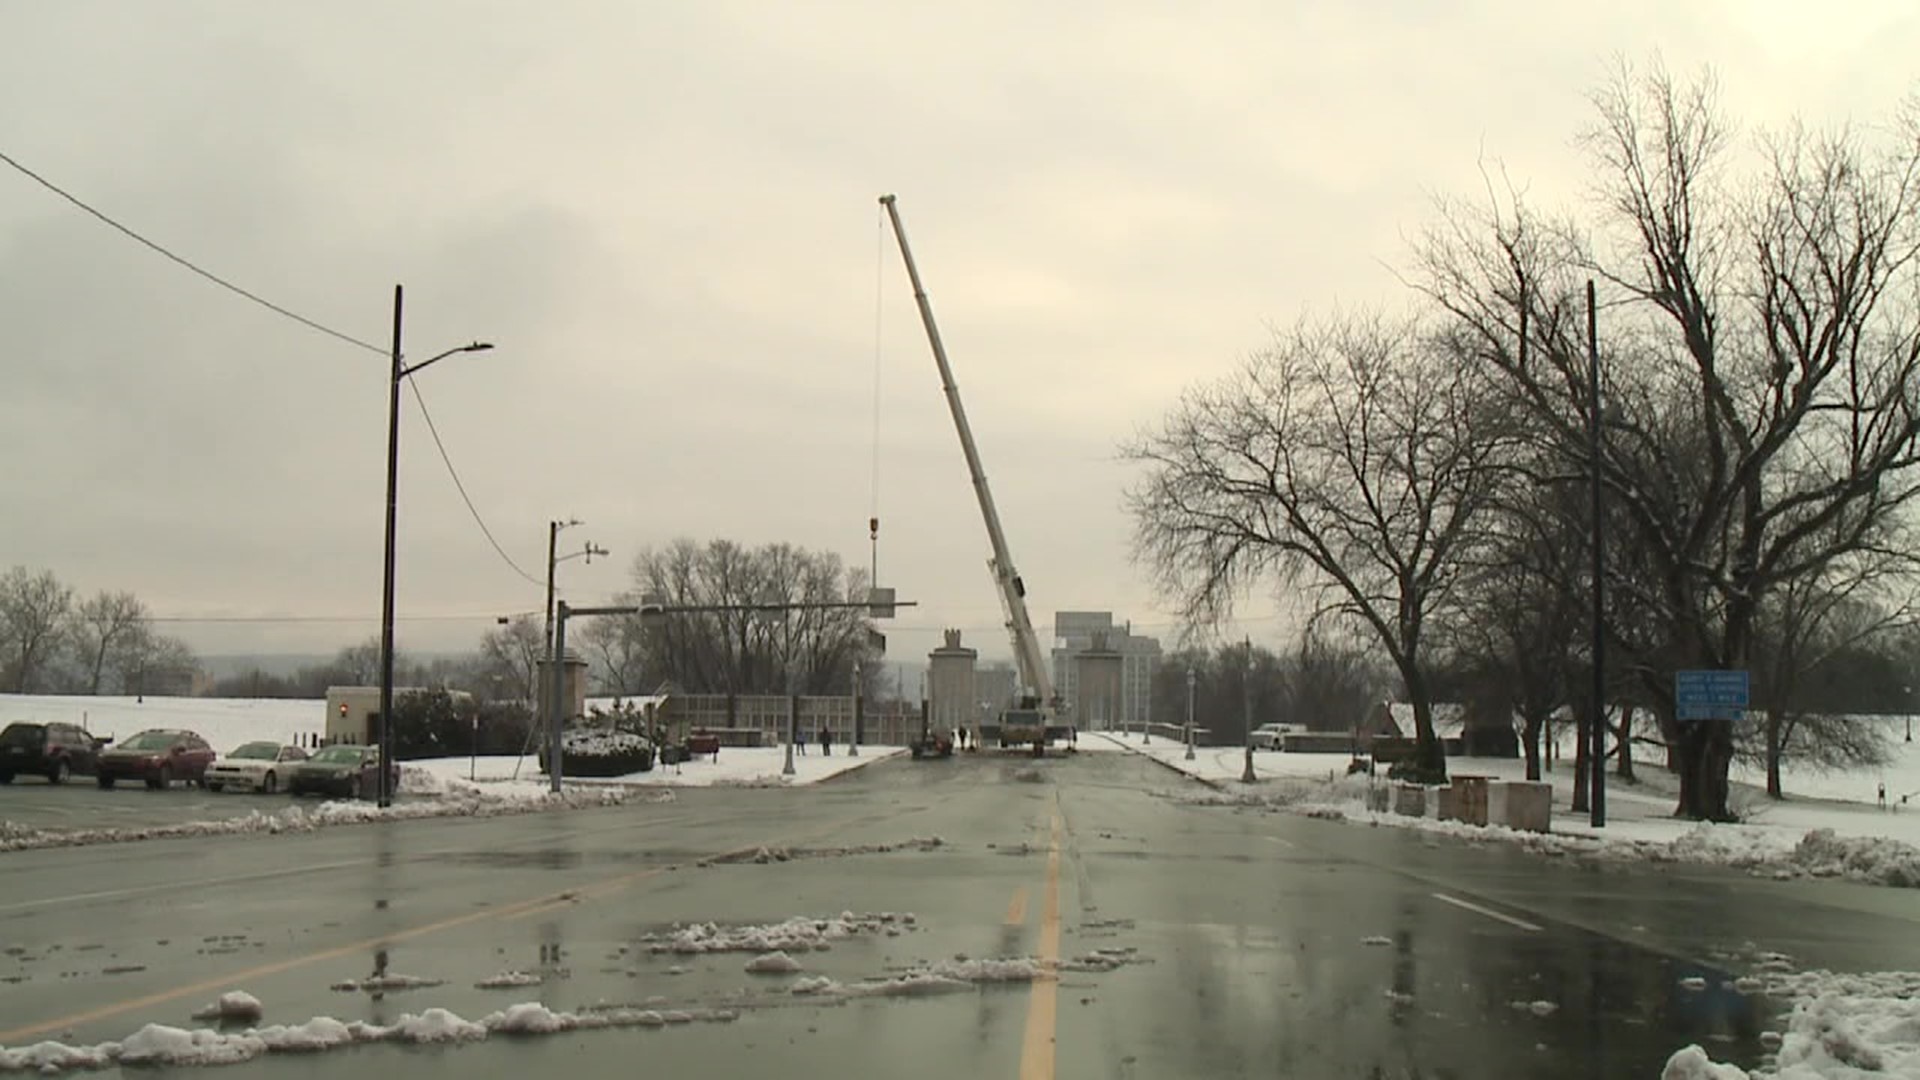 Crews shut down the bridge when heavy rain and melting snow caused the Susquehanna River to rise.